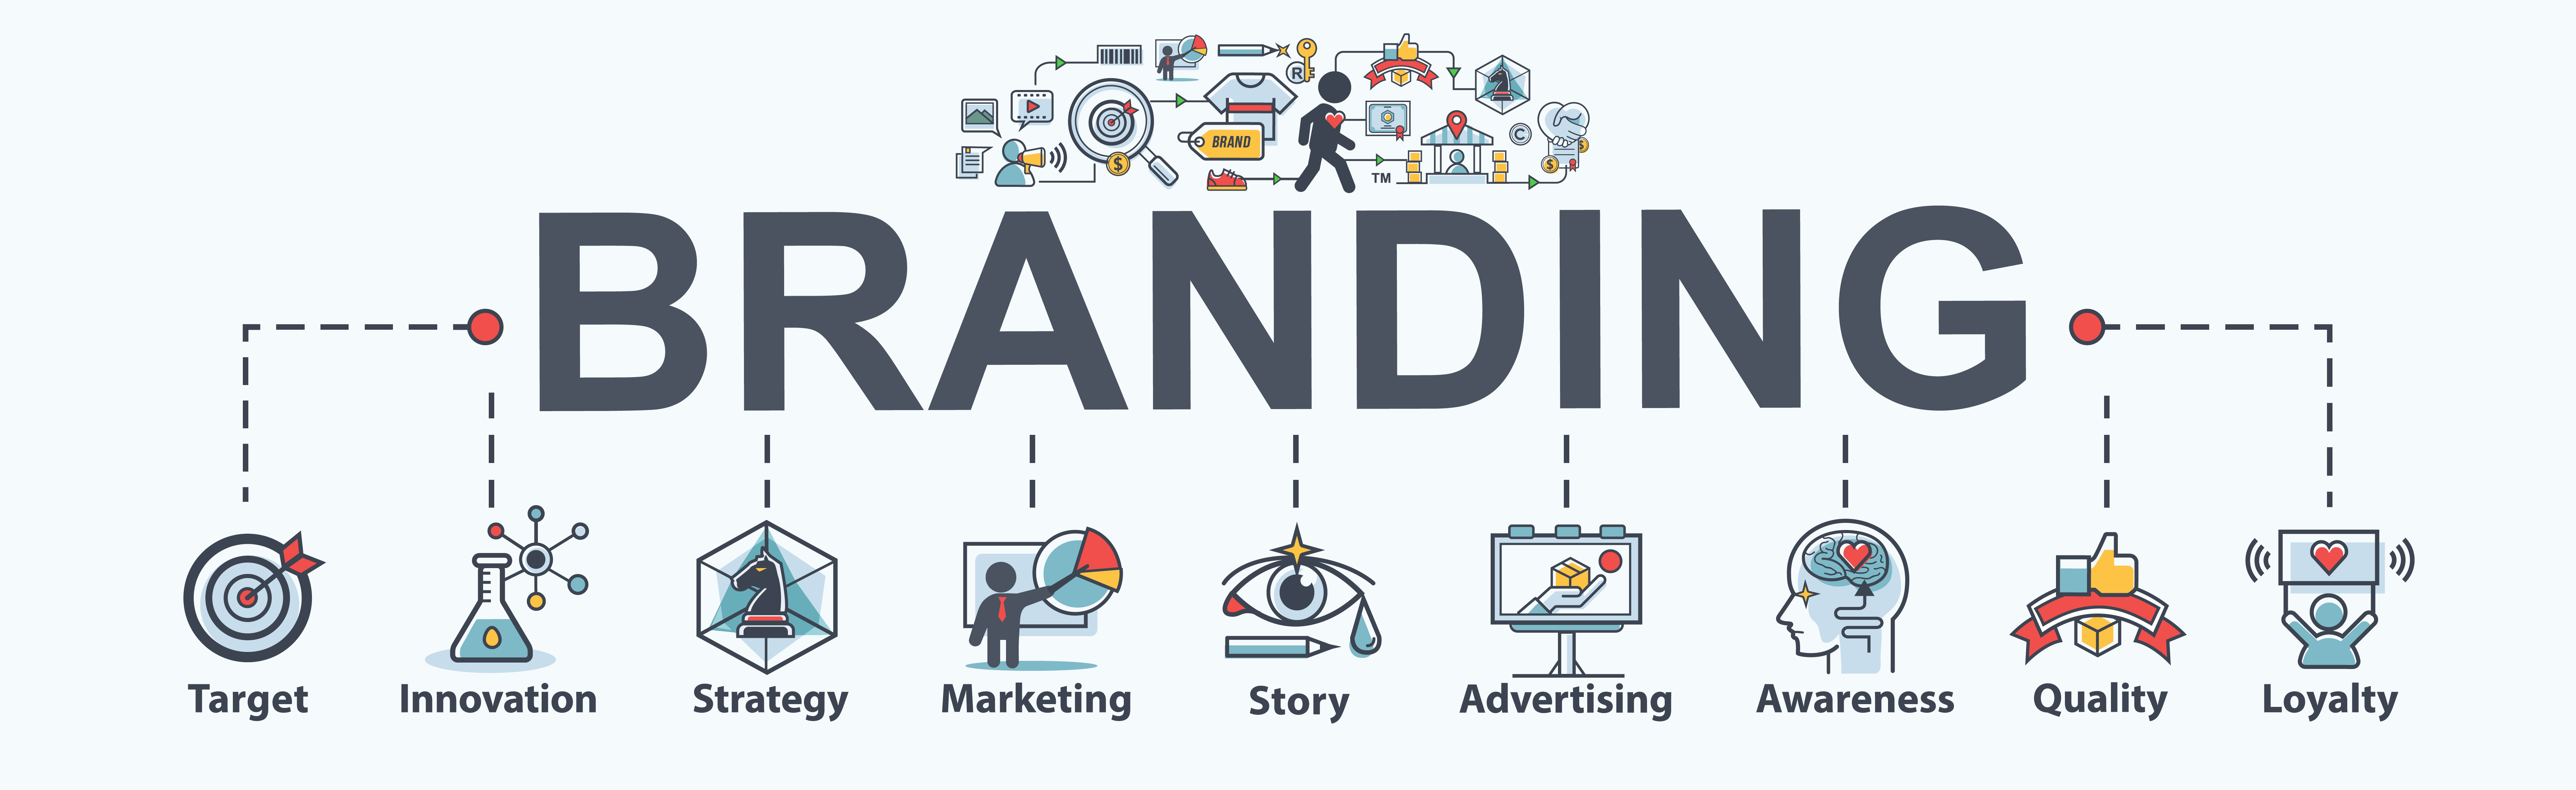 5 Key Brand Elements for effective branding CreativRazor